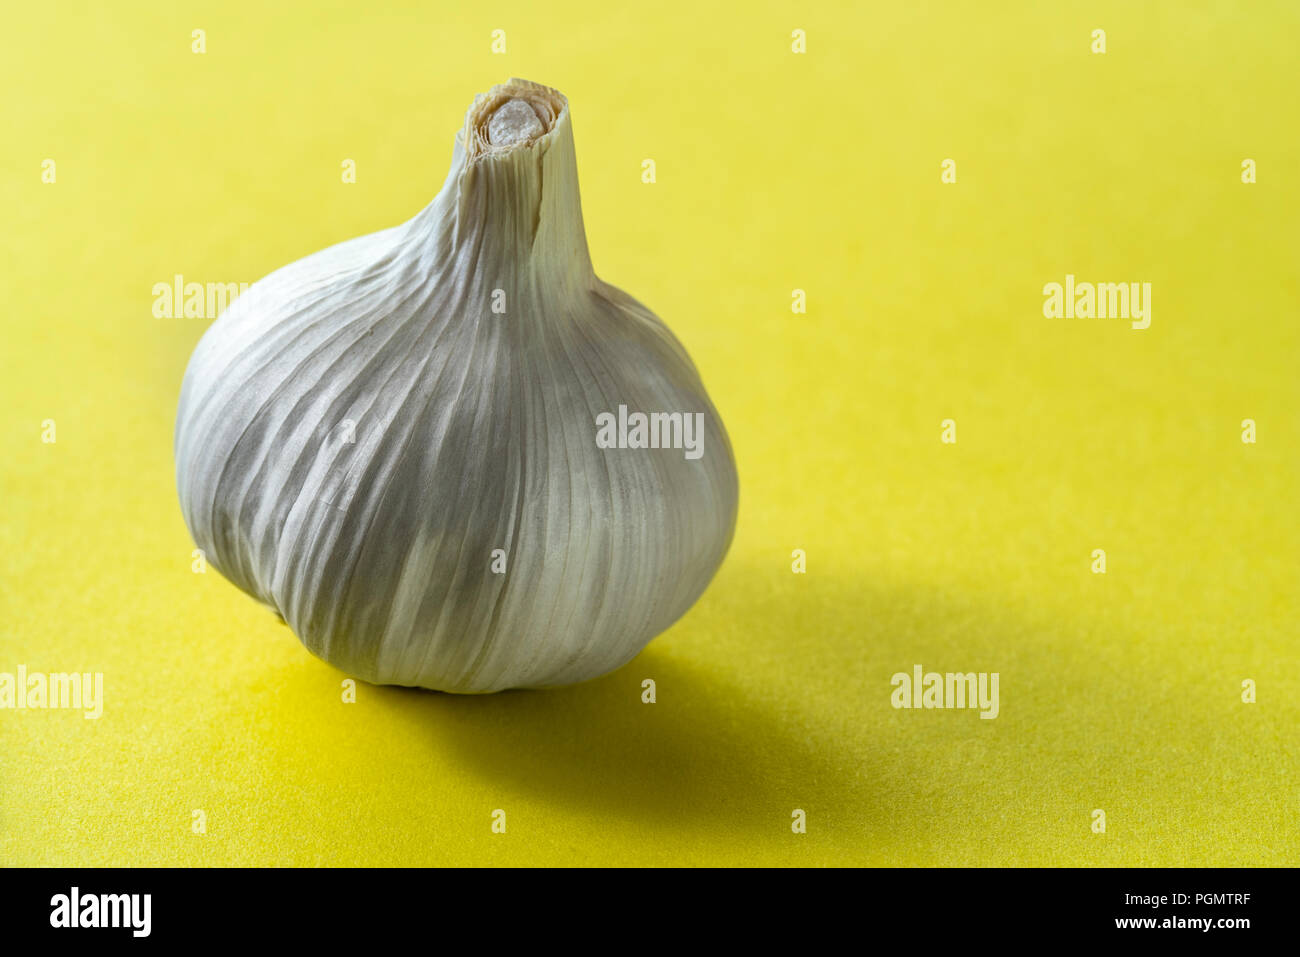 Garlic bulb on an acid yellow background. Stock Photo